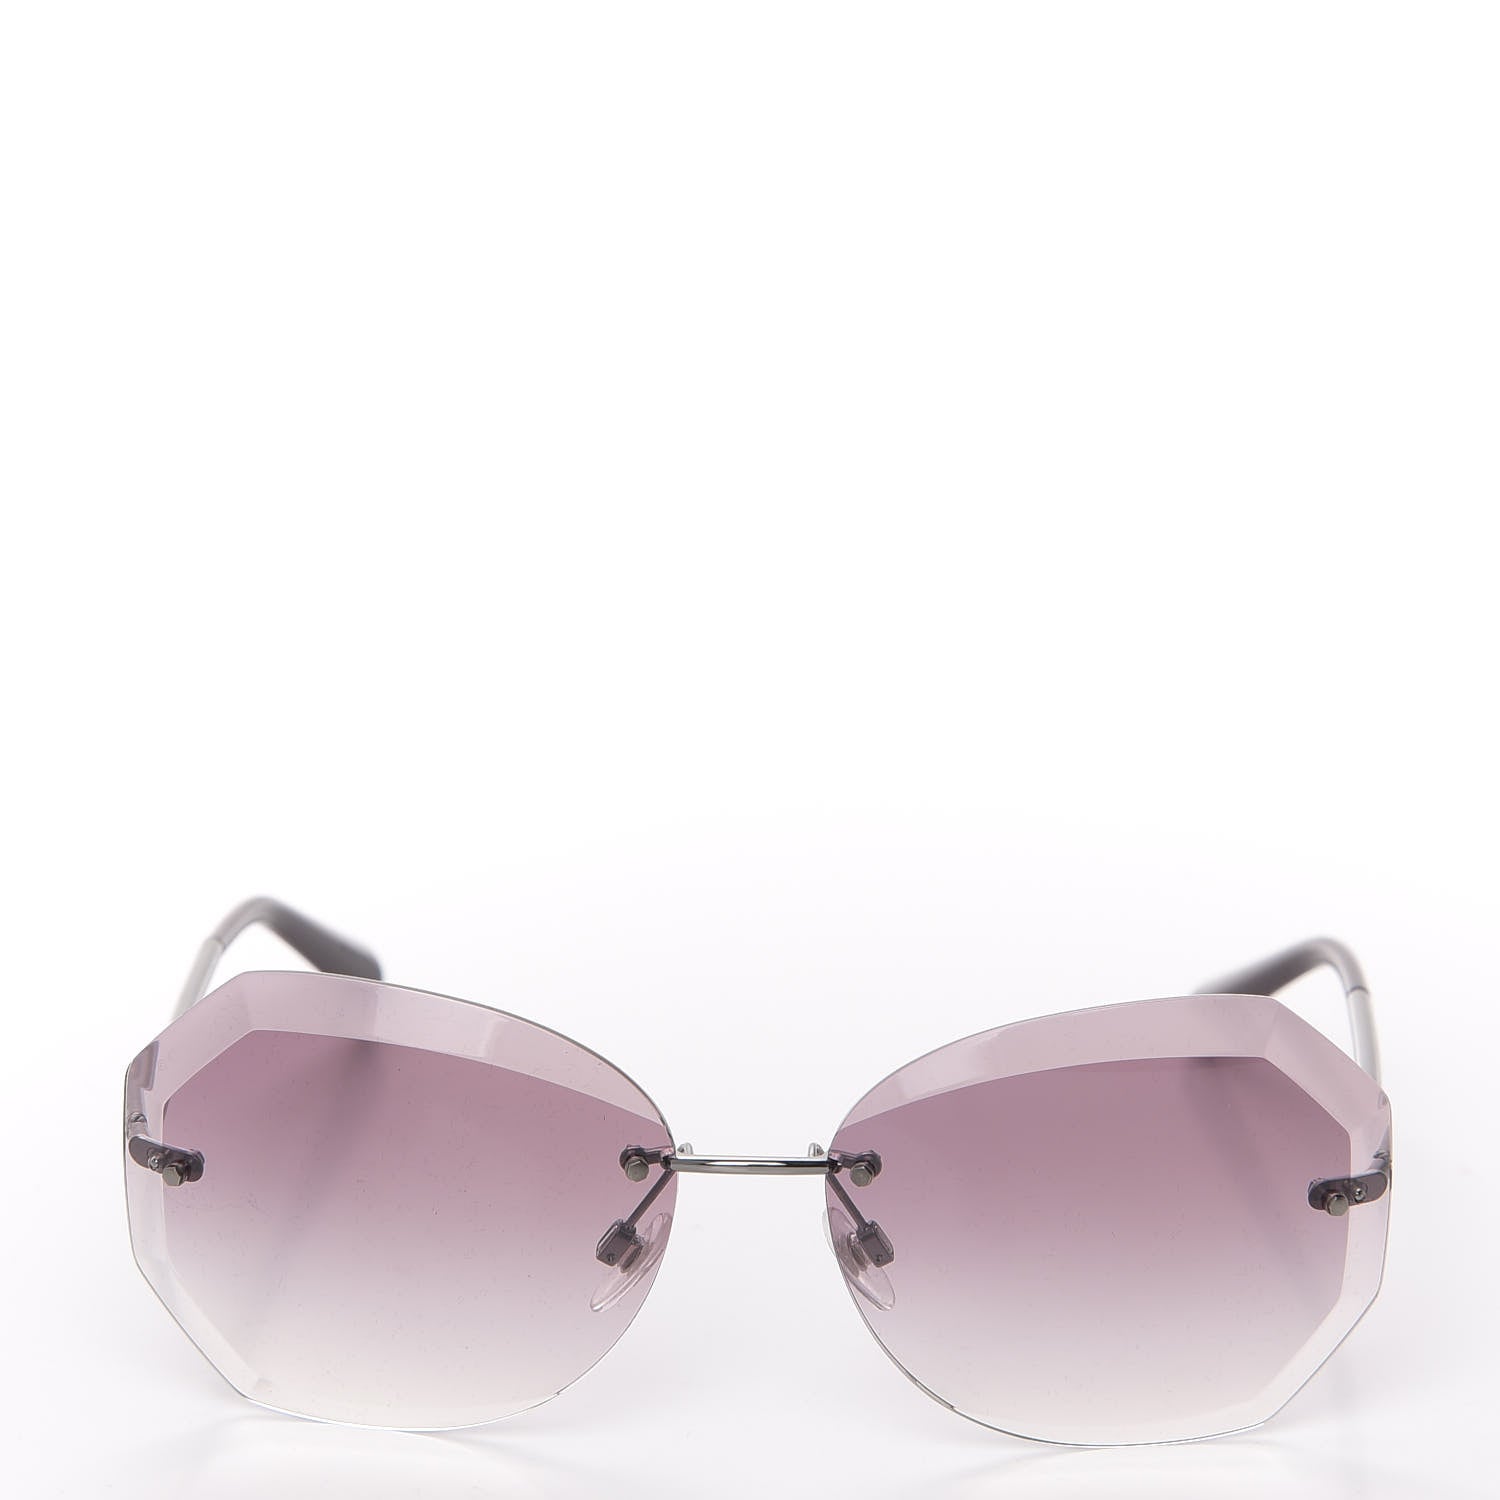 chanel sunglasses women authentic new